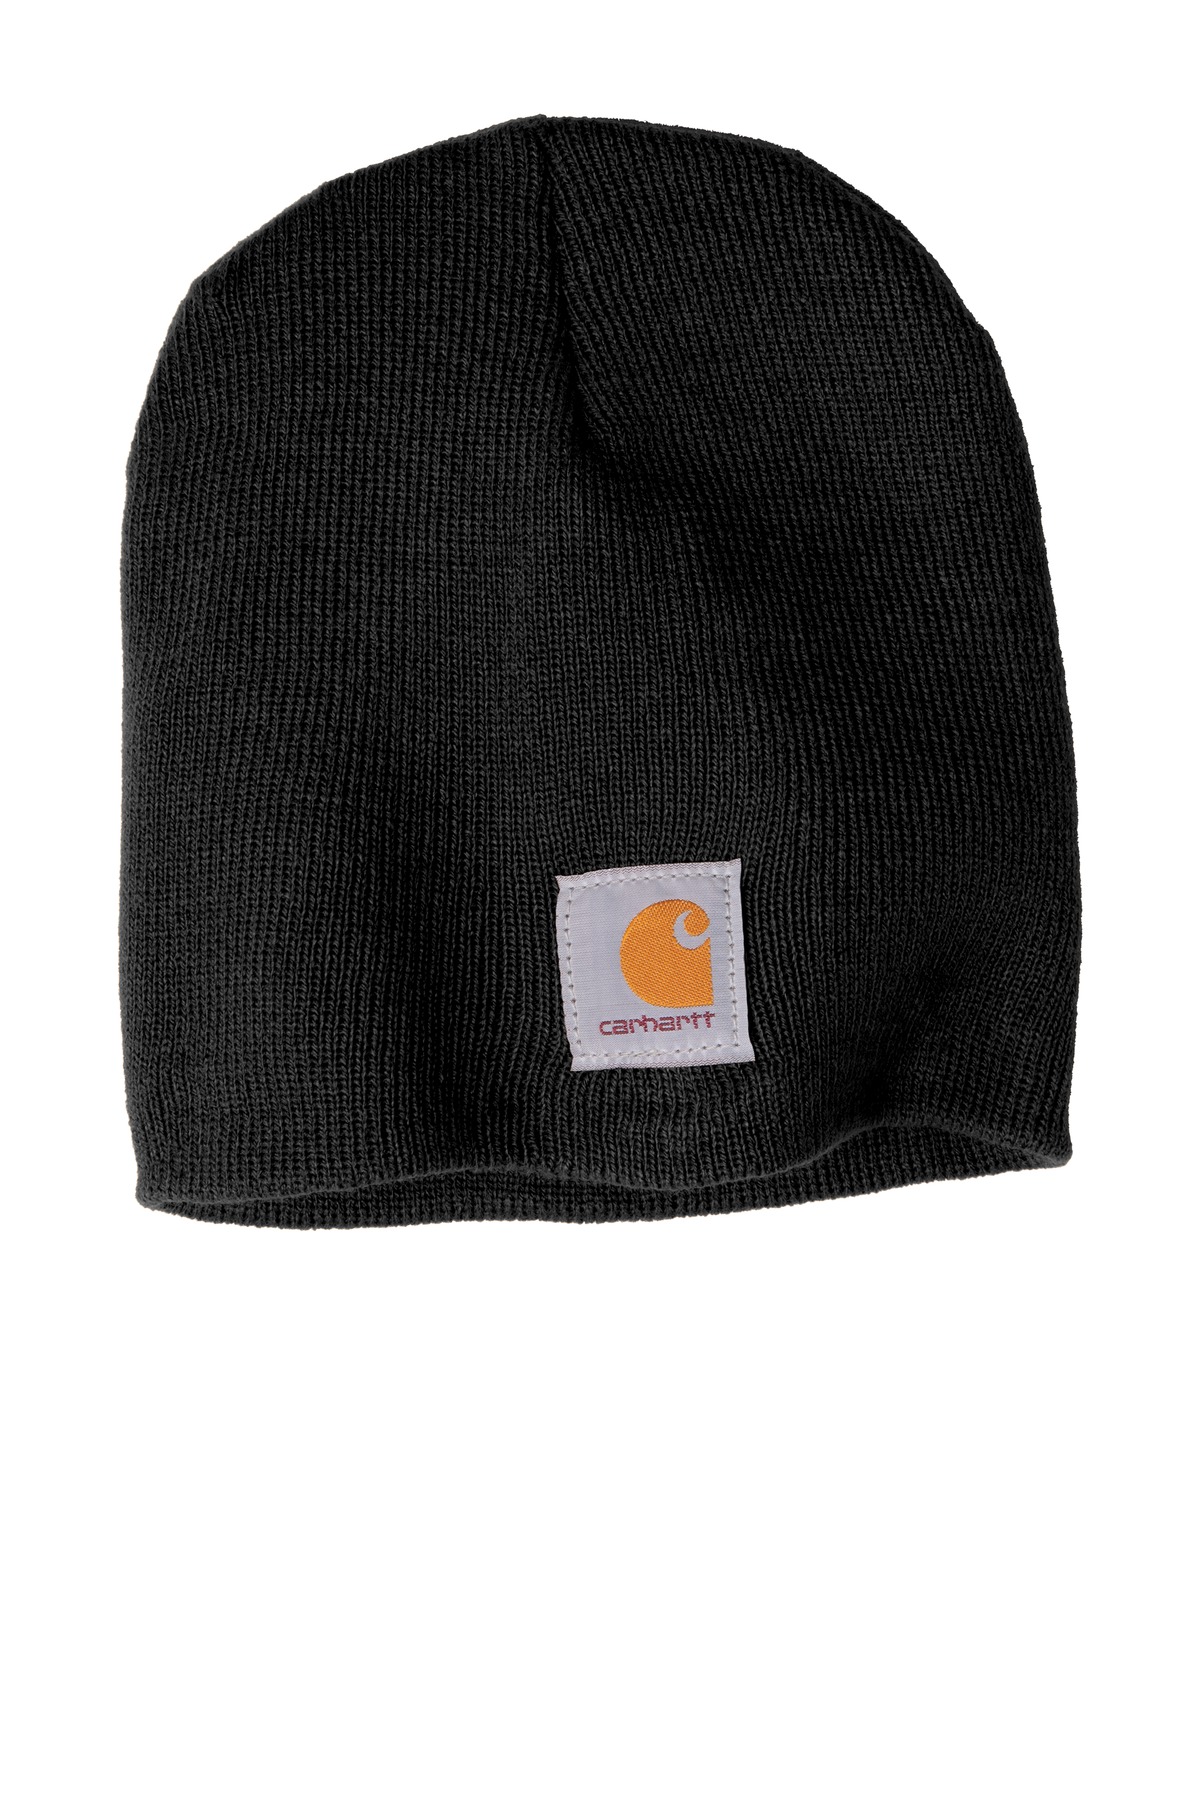 Carhartt ® Acrylic Knit Hat. CTA205 - Custom Shirt Shop